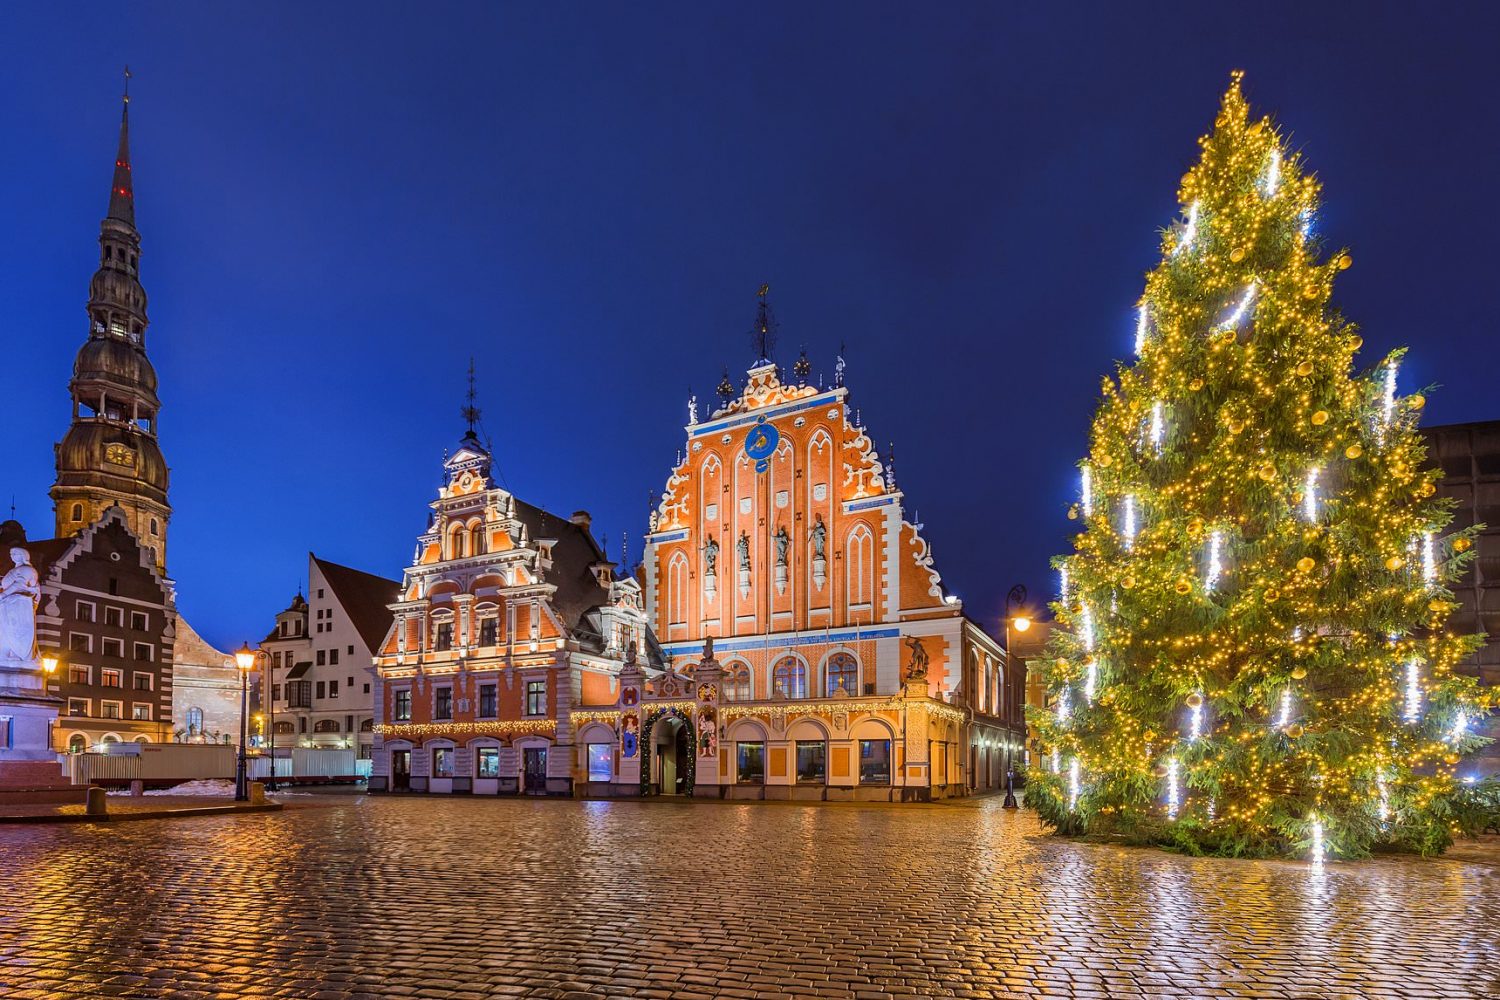 Nice Riga christmas market